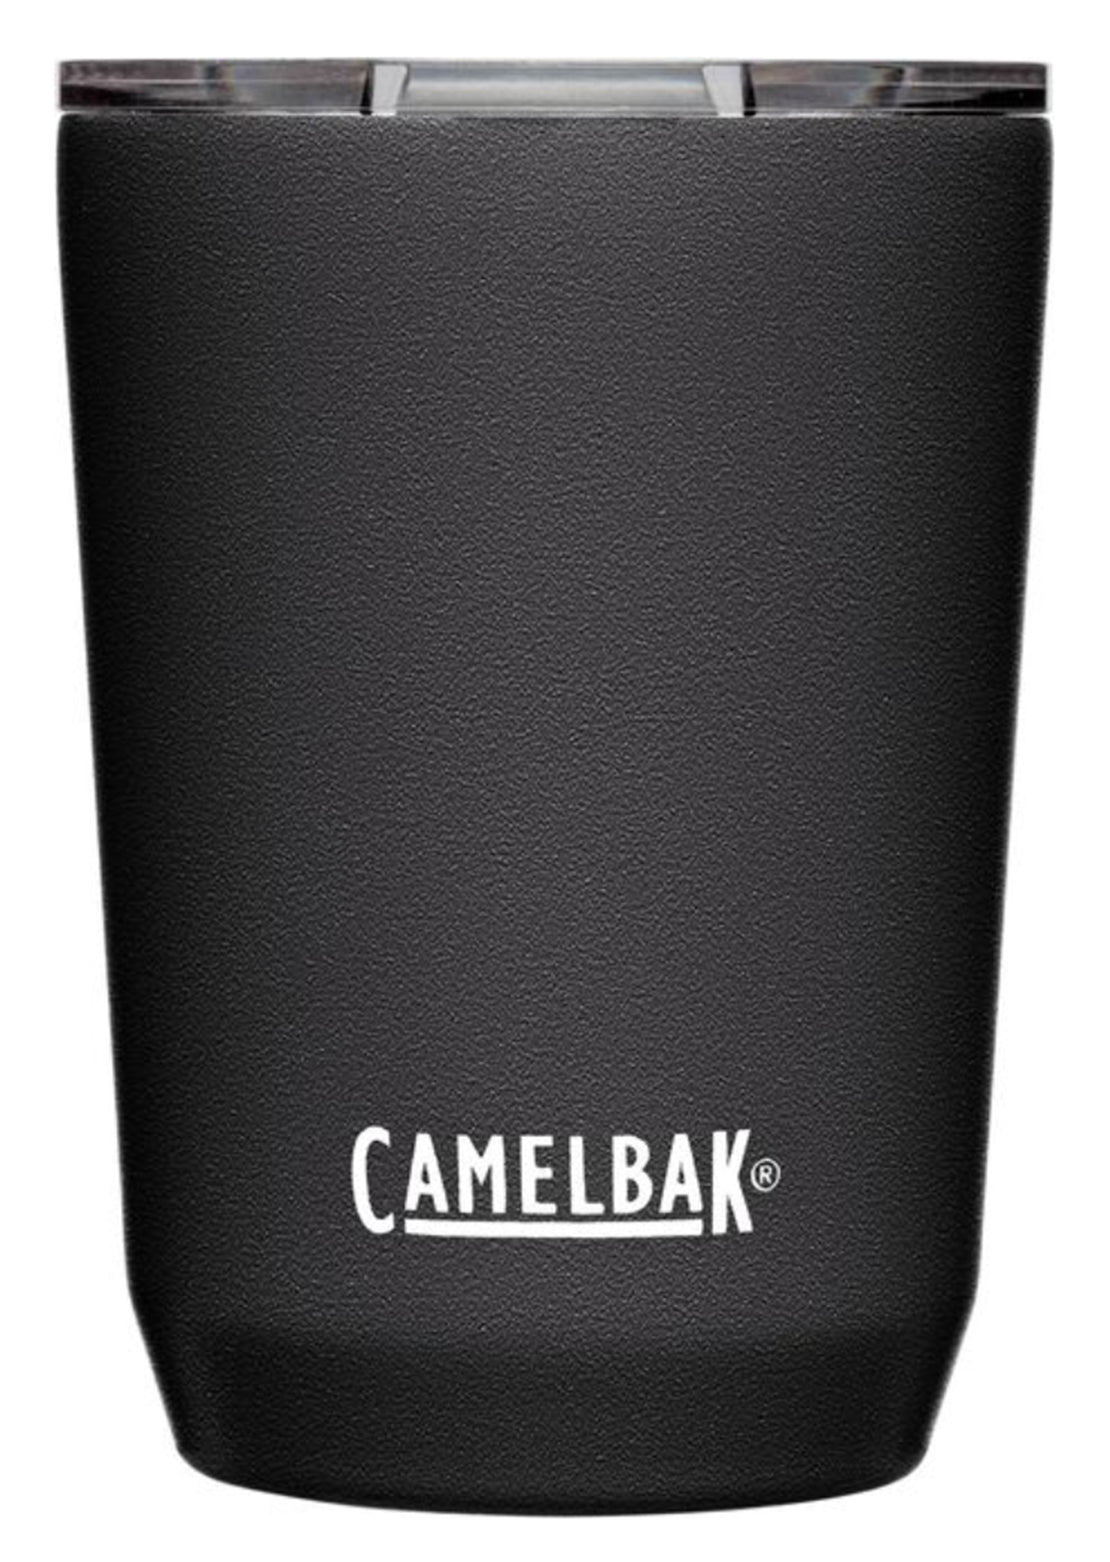 Camelbak Tumbler Stainless Steel Vacuum Insulated 12 oz Black